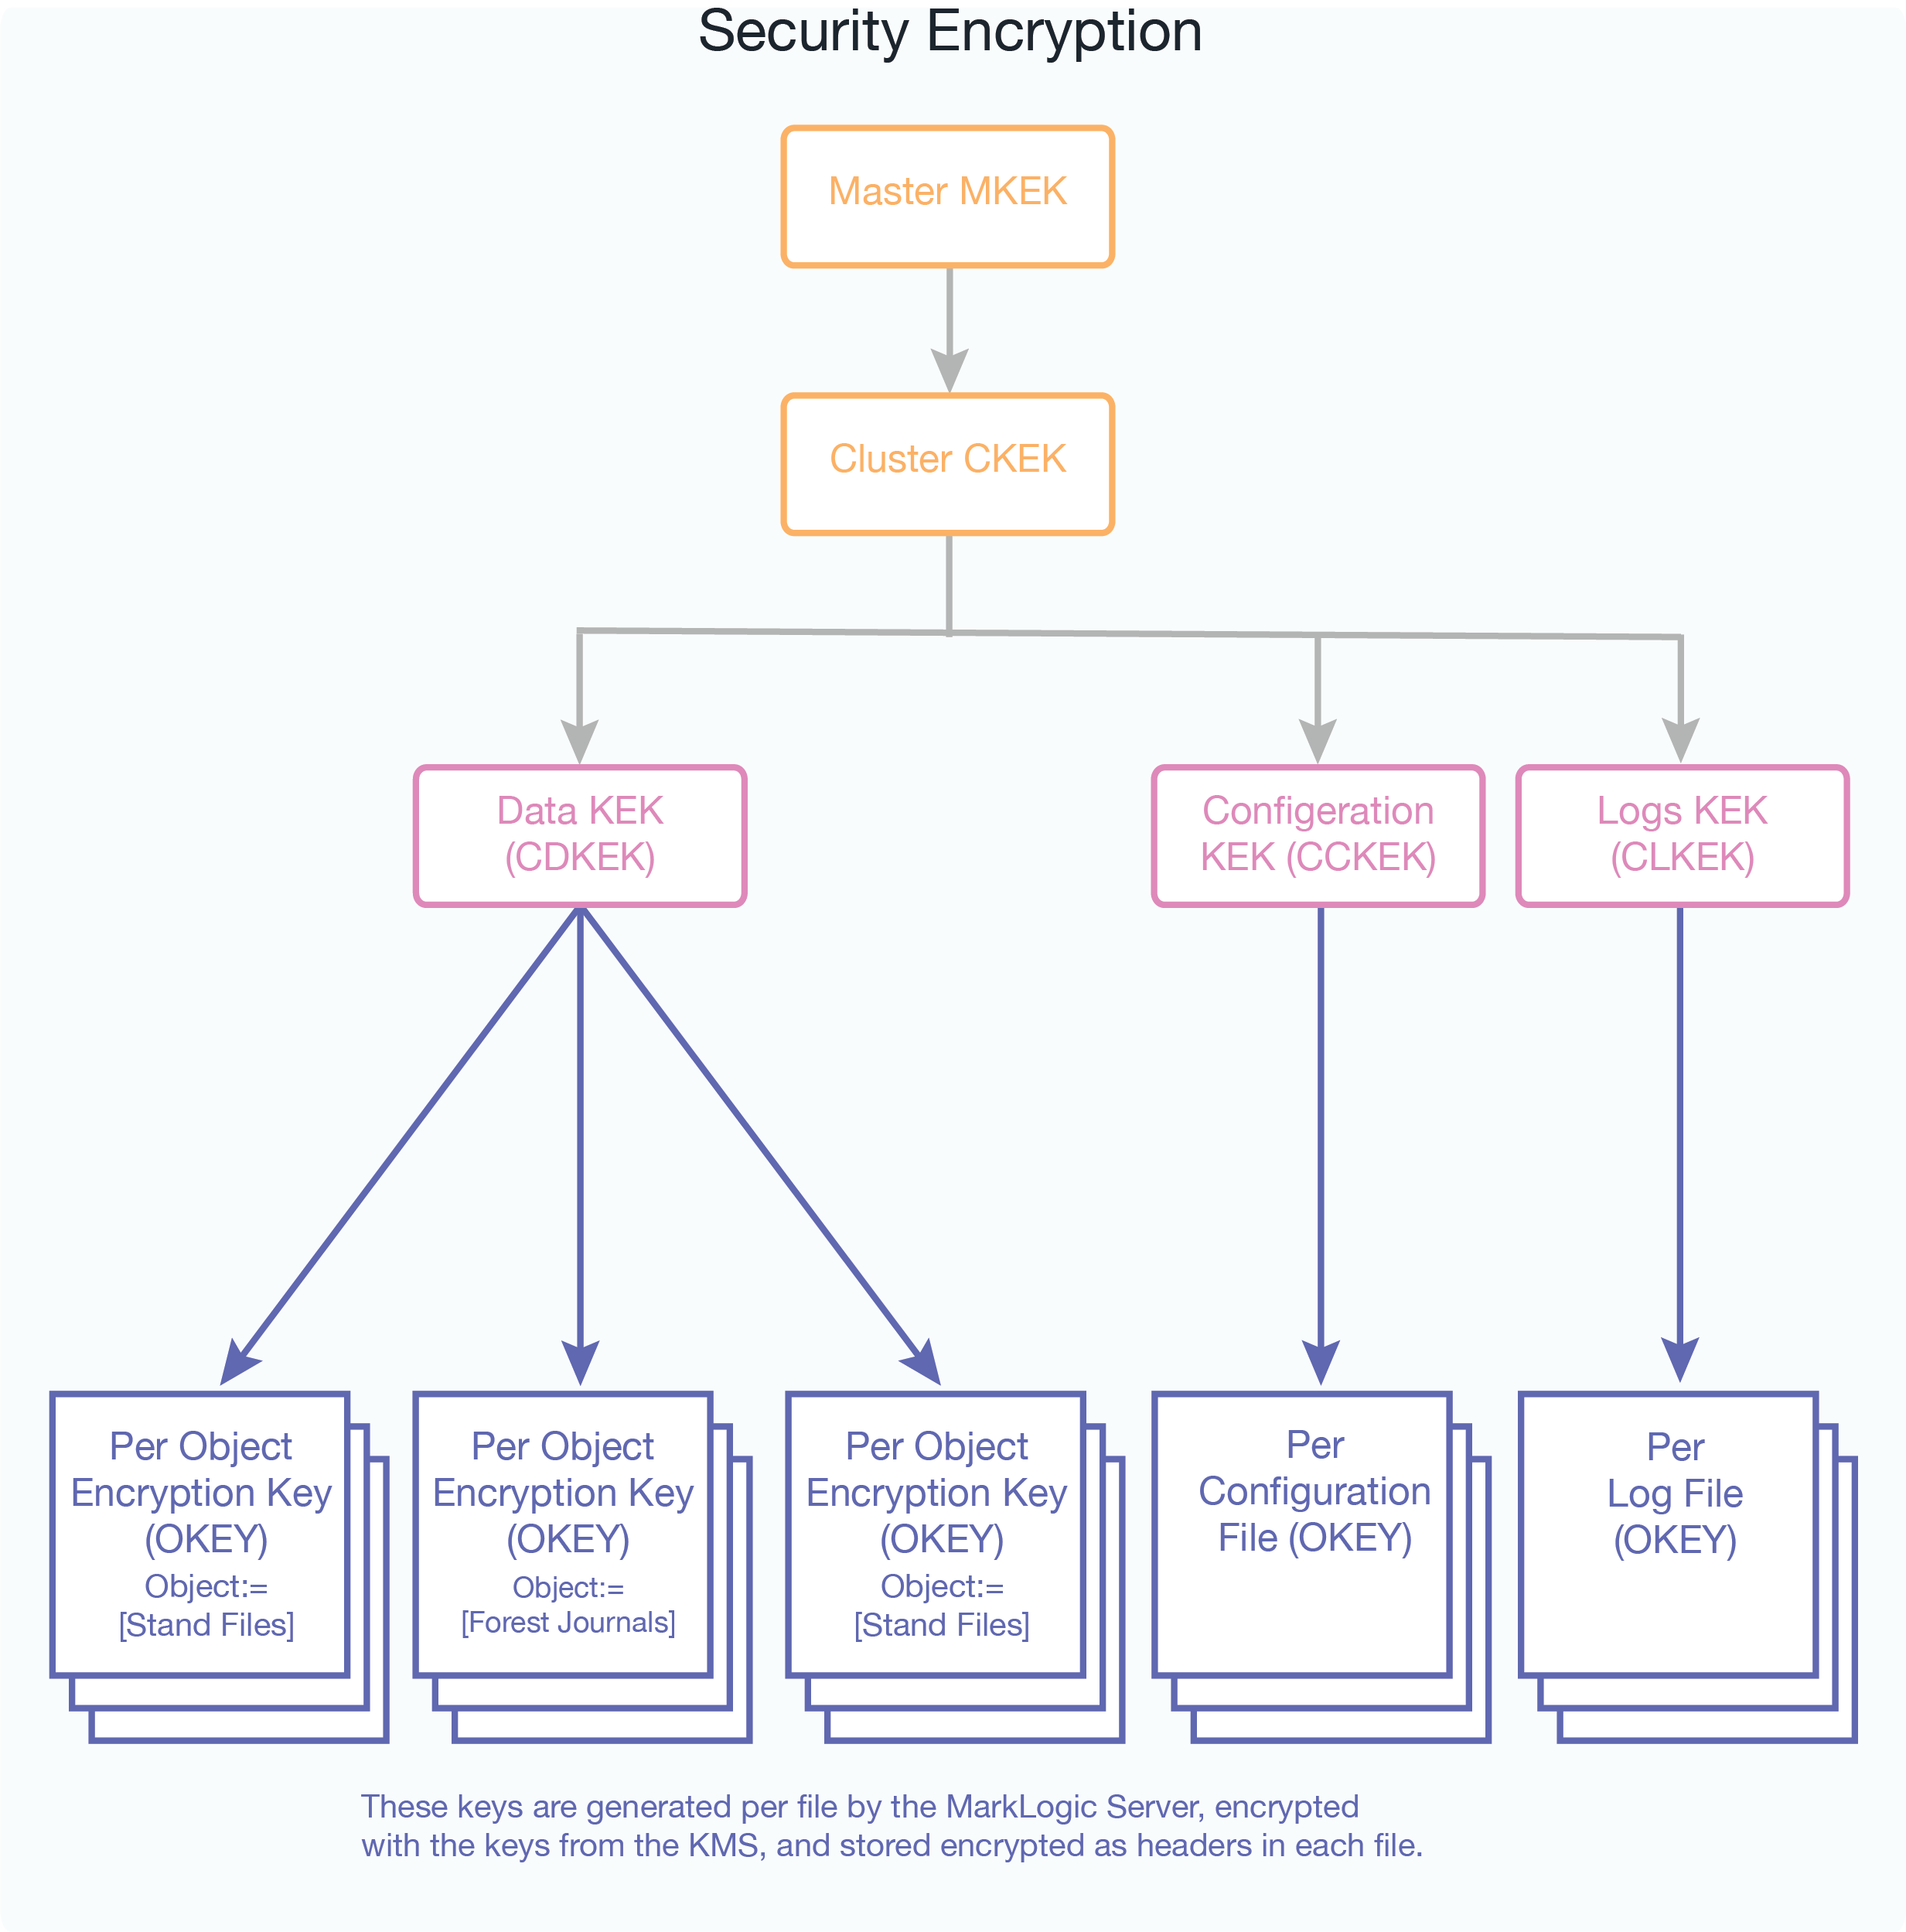 Diagram of the security encryption key hierarchy